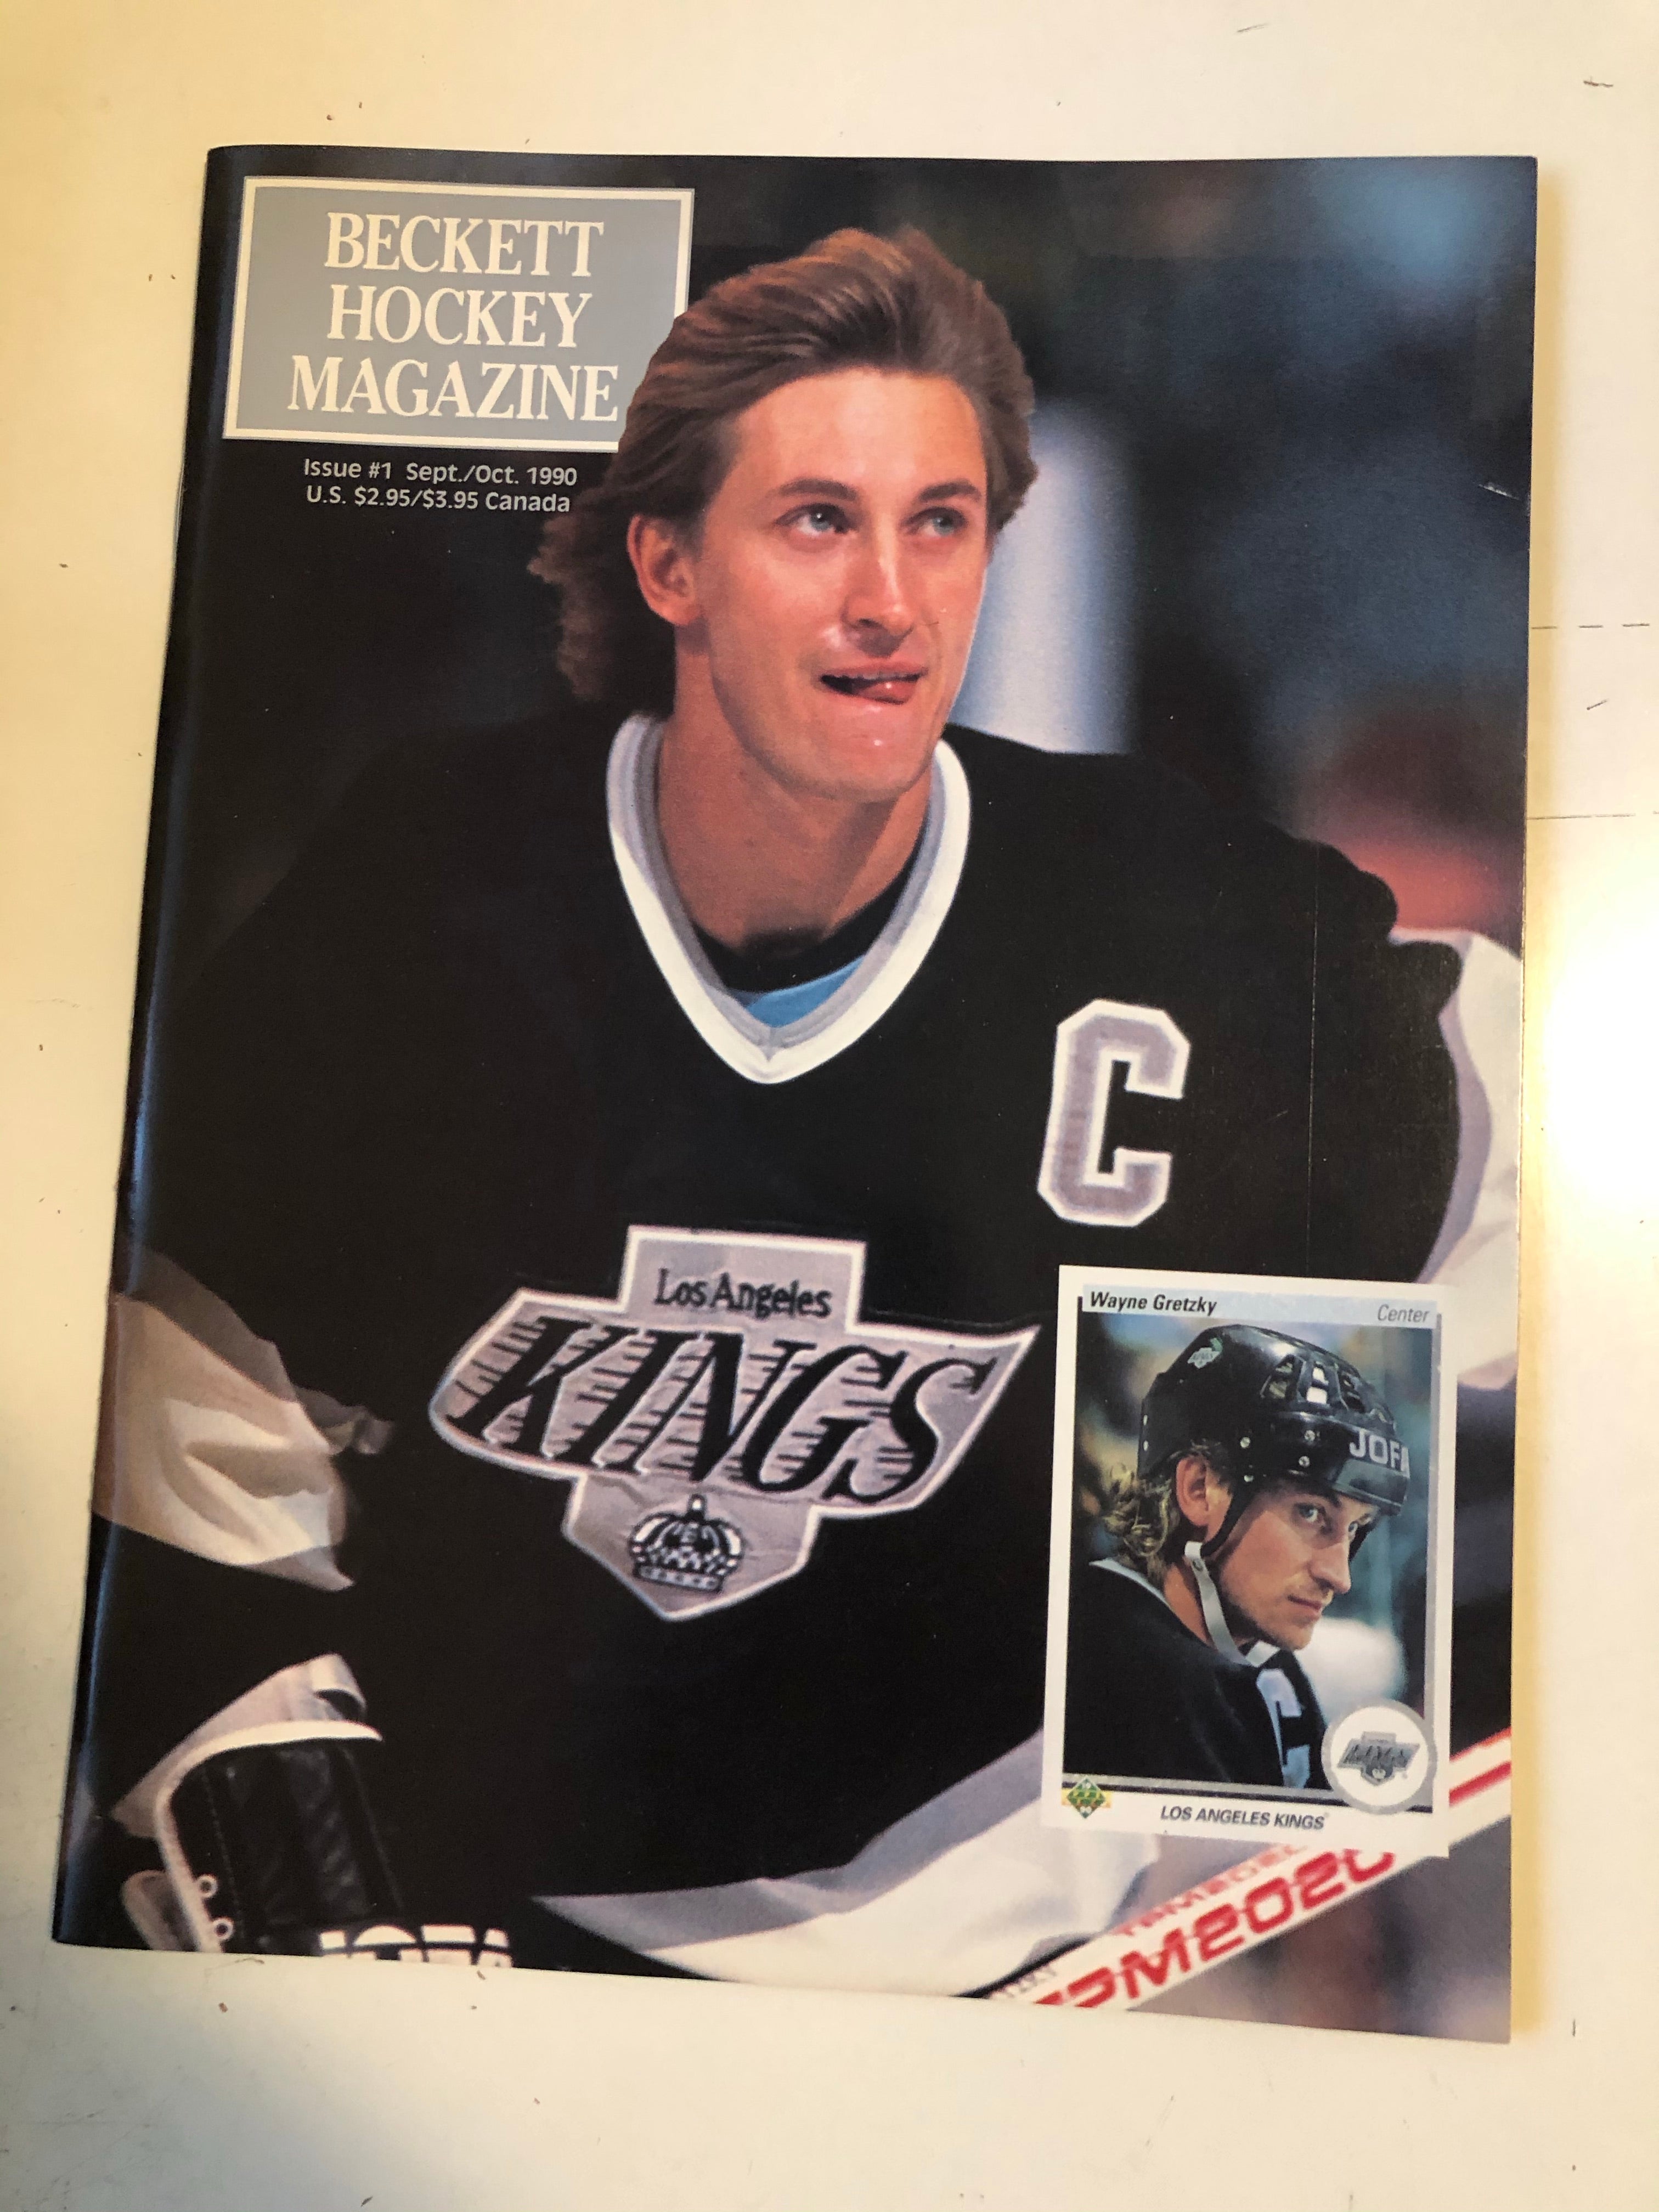 Hockey Beckett #1 first issue price guide magazine 1990